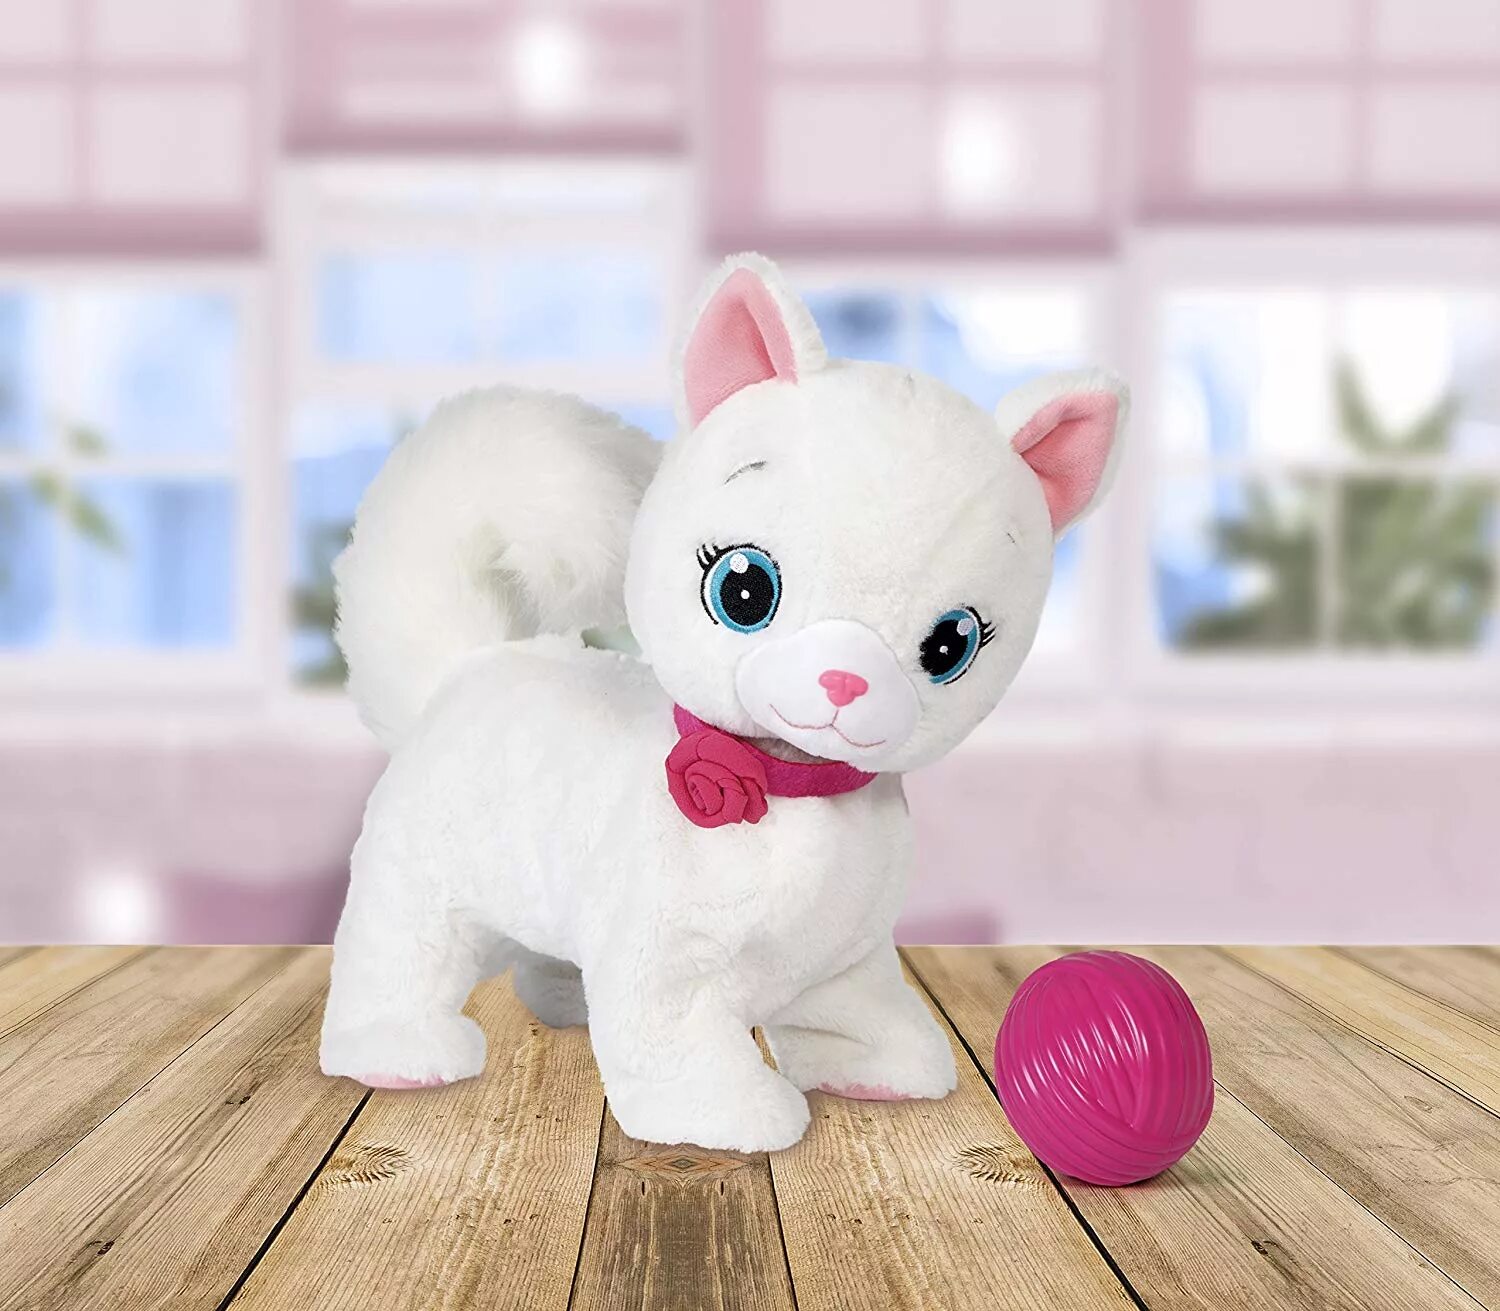 Интерактивная кошка Bianca IMC Toys. 95847 Кошка Bianca интерактивная. Кошка Бьянка интерактивная. Интерактивная мягкая игрушка IMC Toys котенок. Игрушечная кошечка